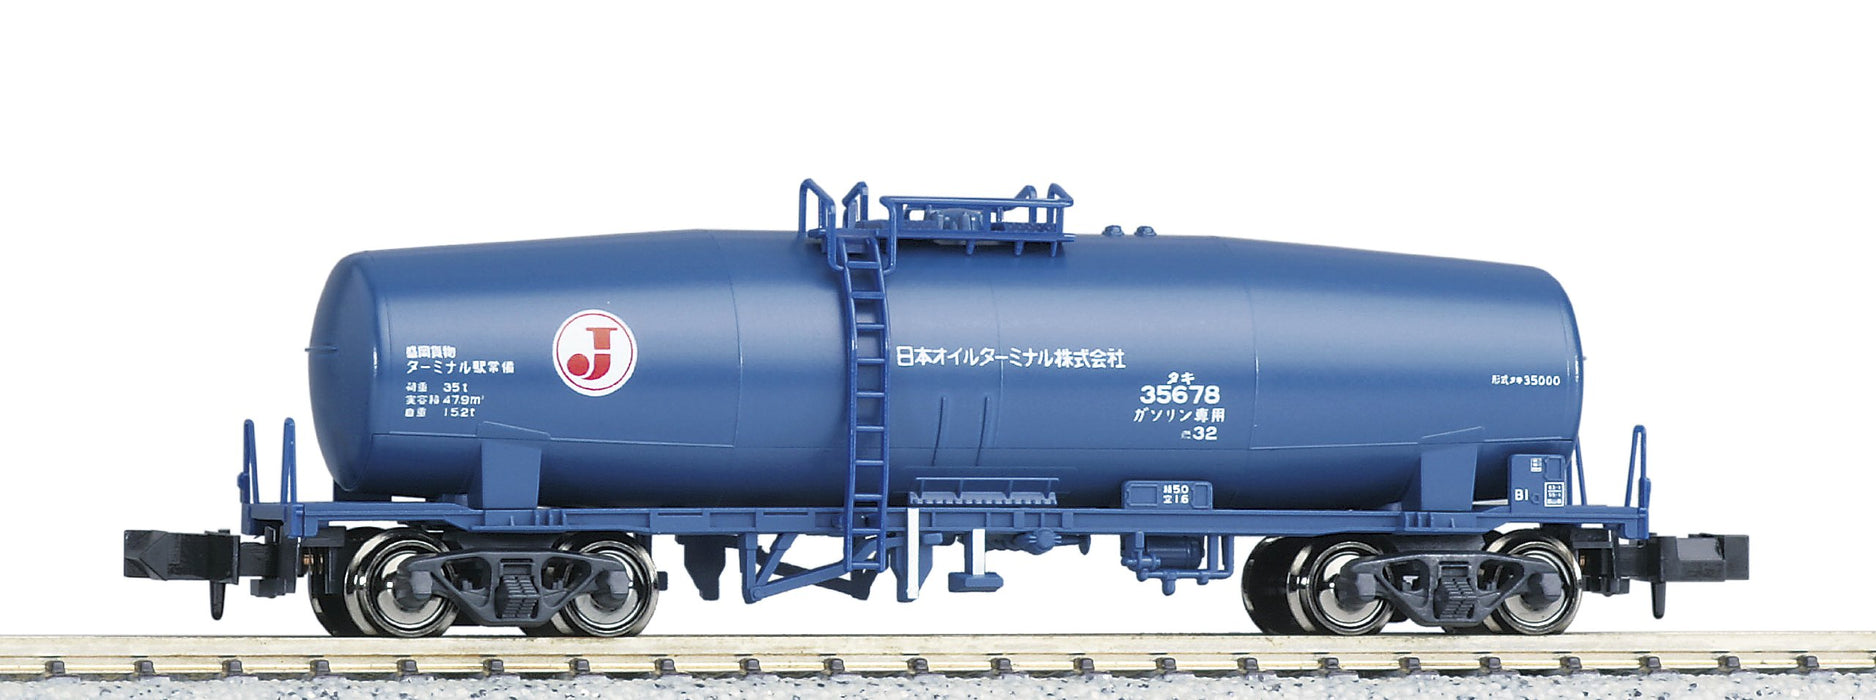 Kato N Gauge Taki35000 Freight Car - 8050-2 Japan Oil Terminal Model Railway